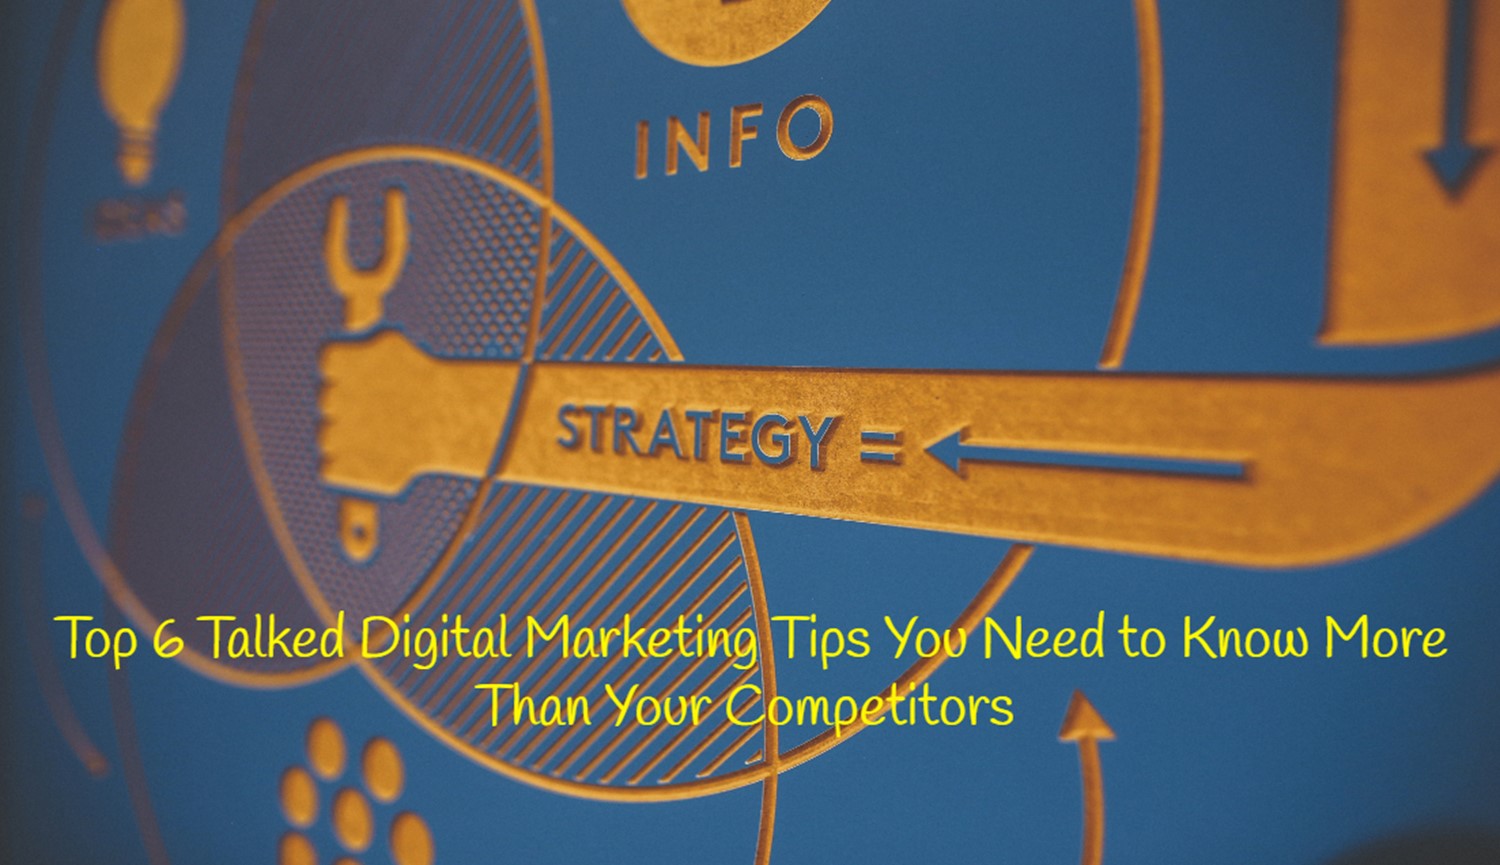 Top 6 Digital Marketing Tips